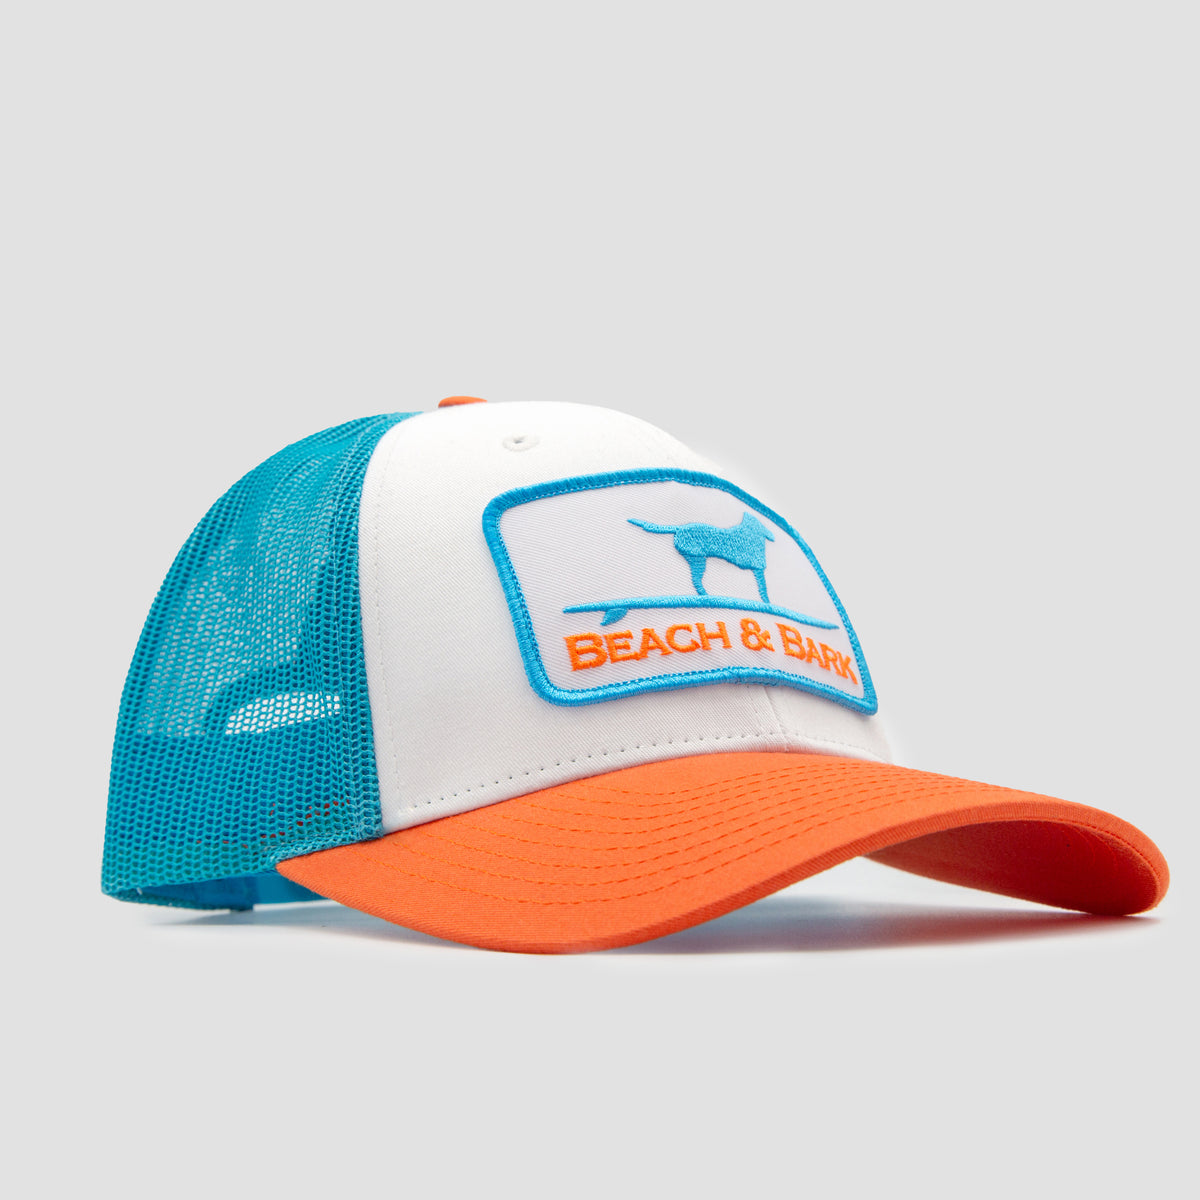 Beach &amp; Bark Medium Snapback Hat